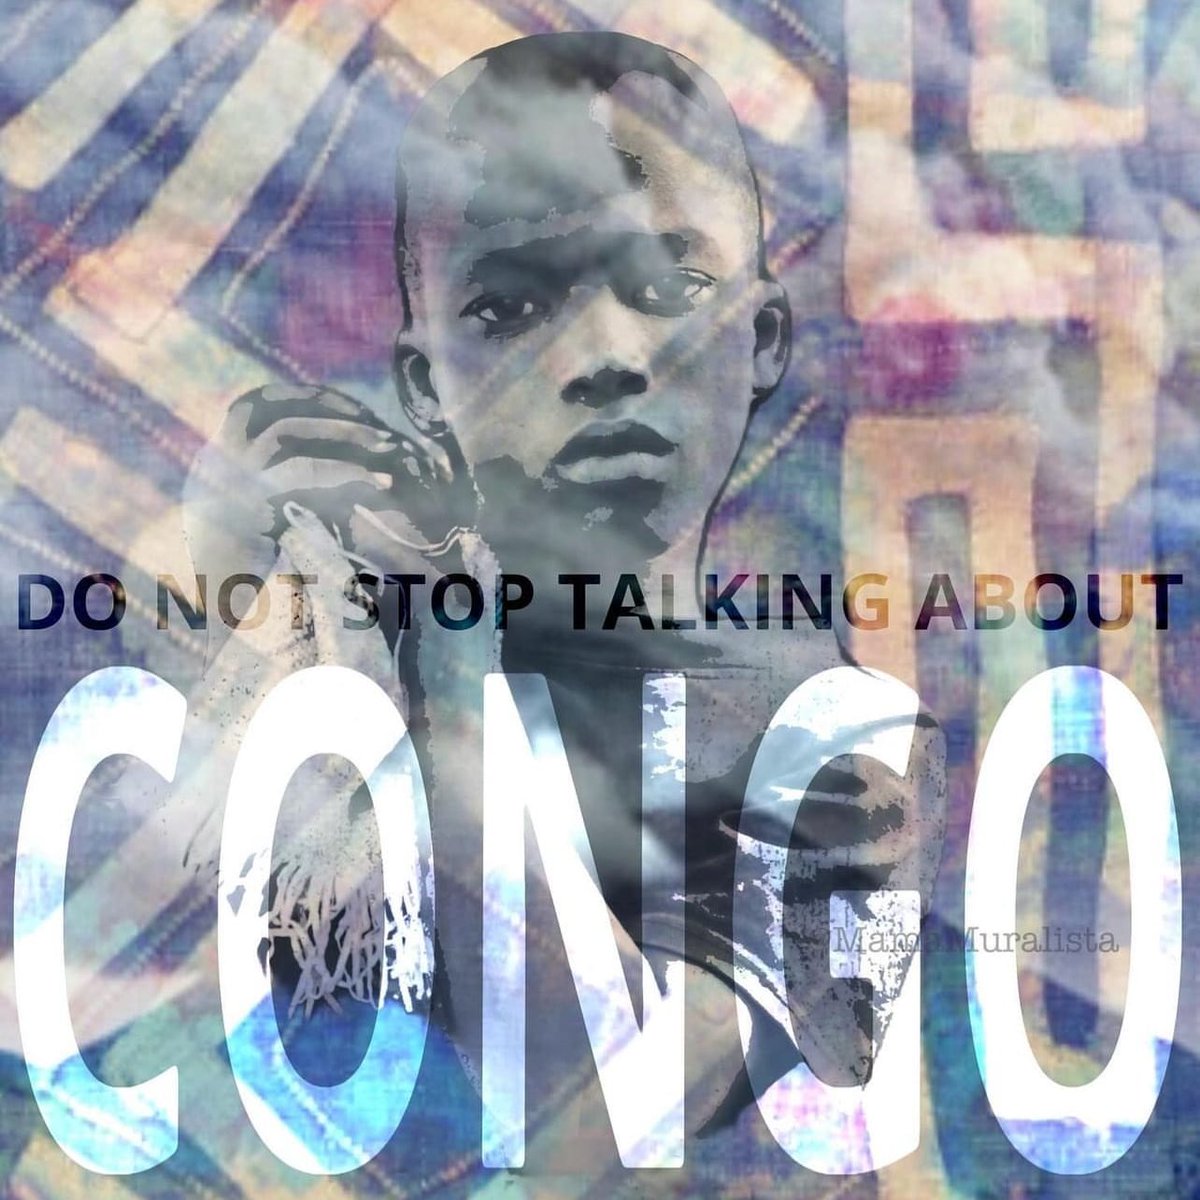 #CongoIsBleeding